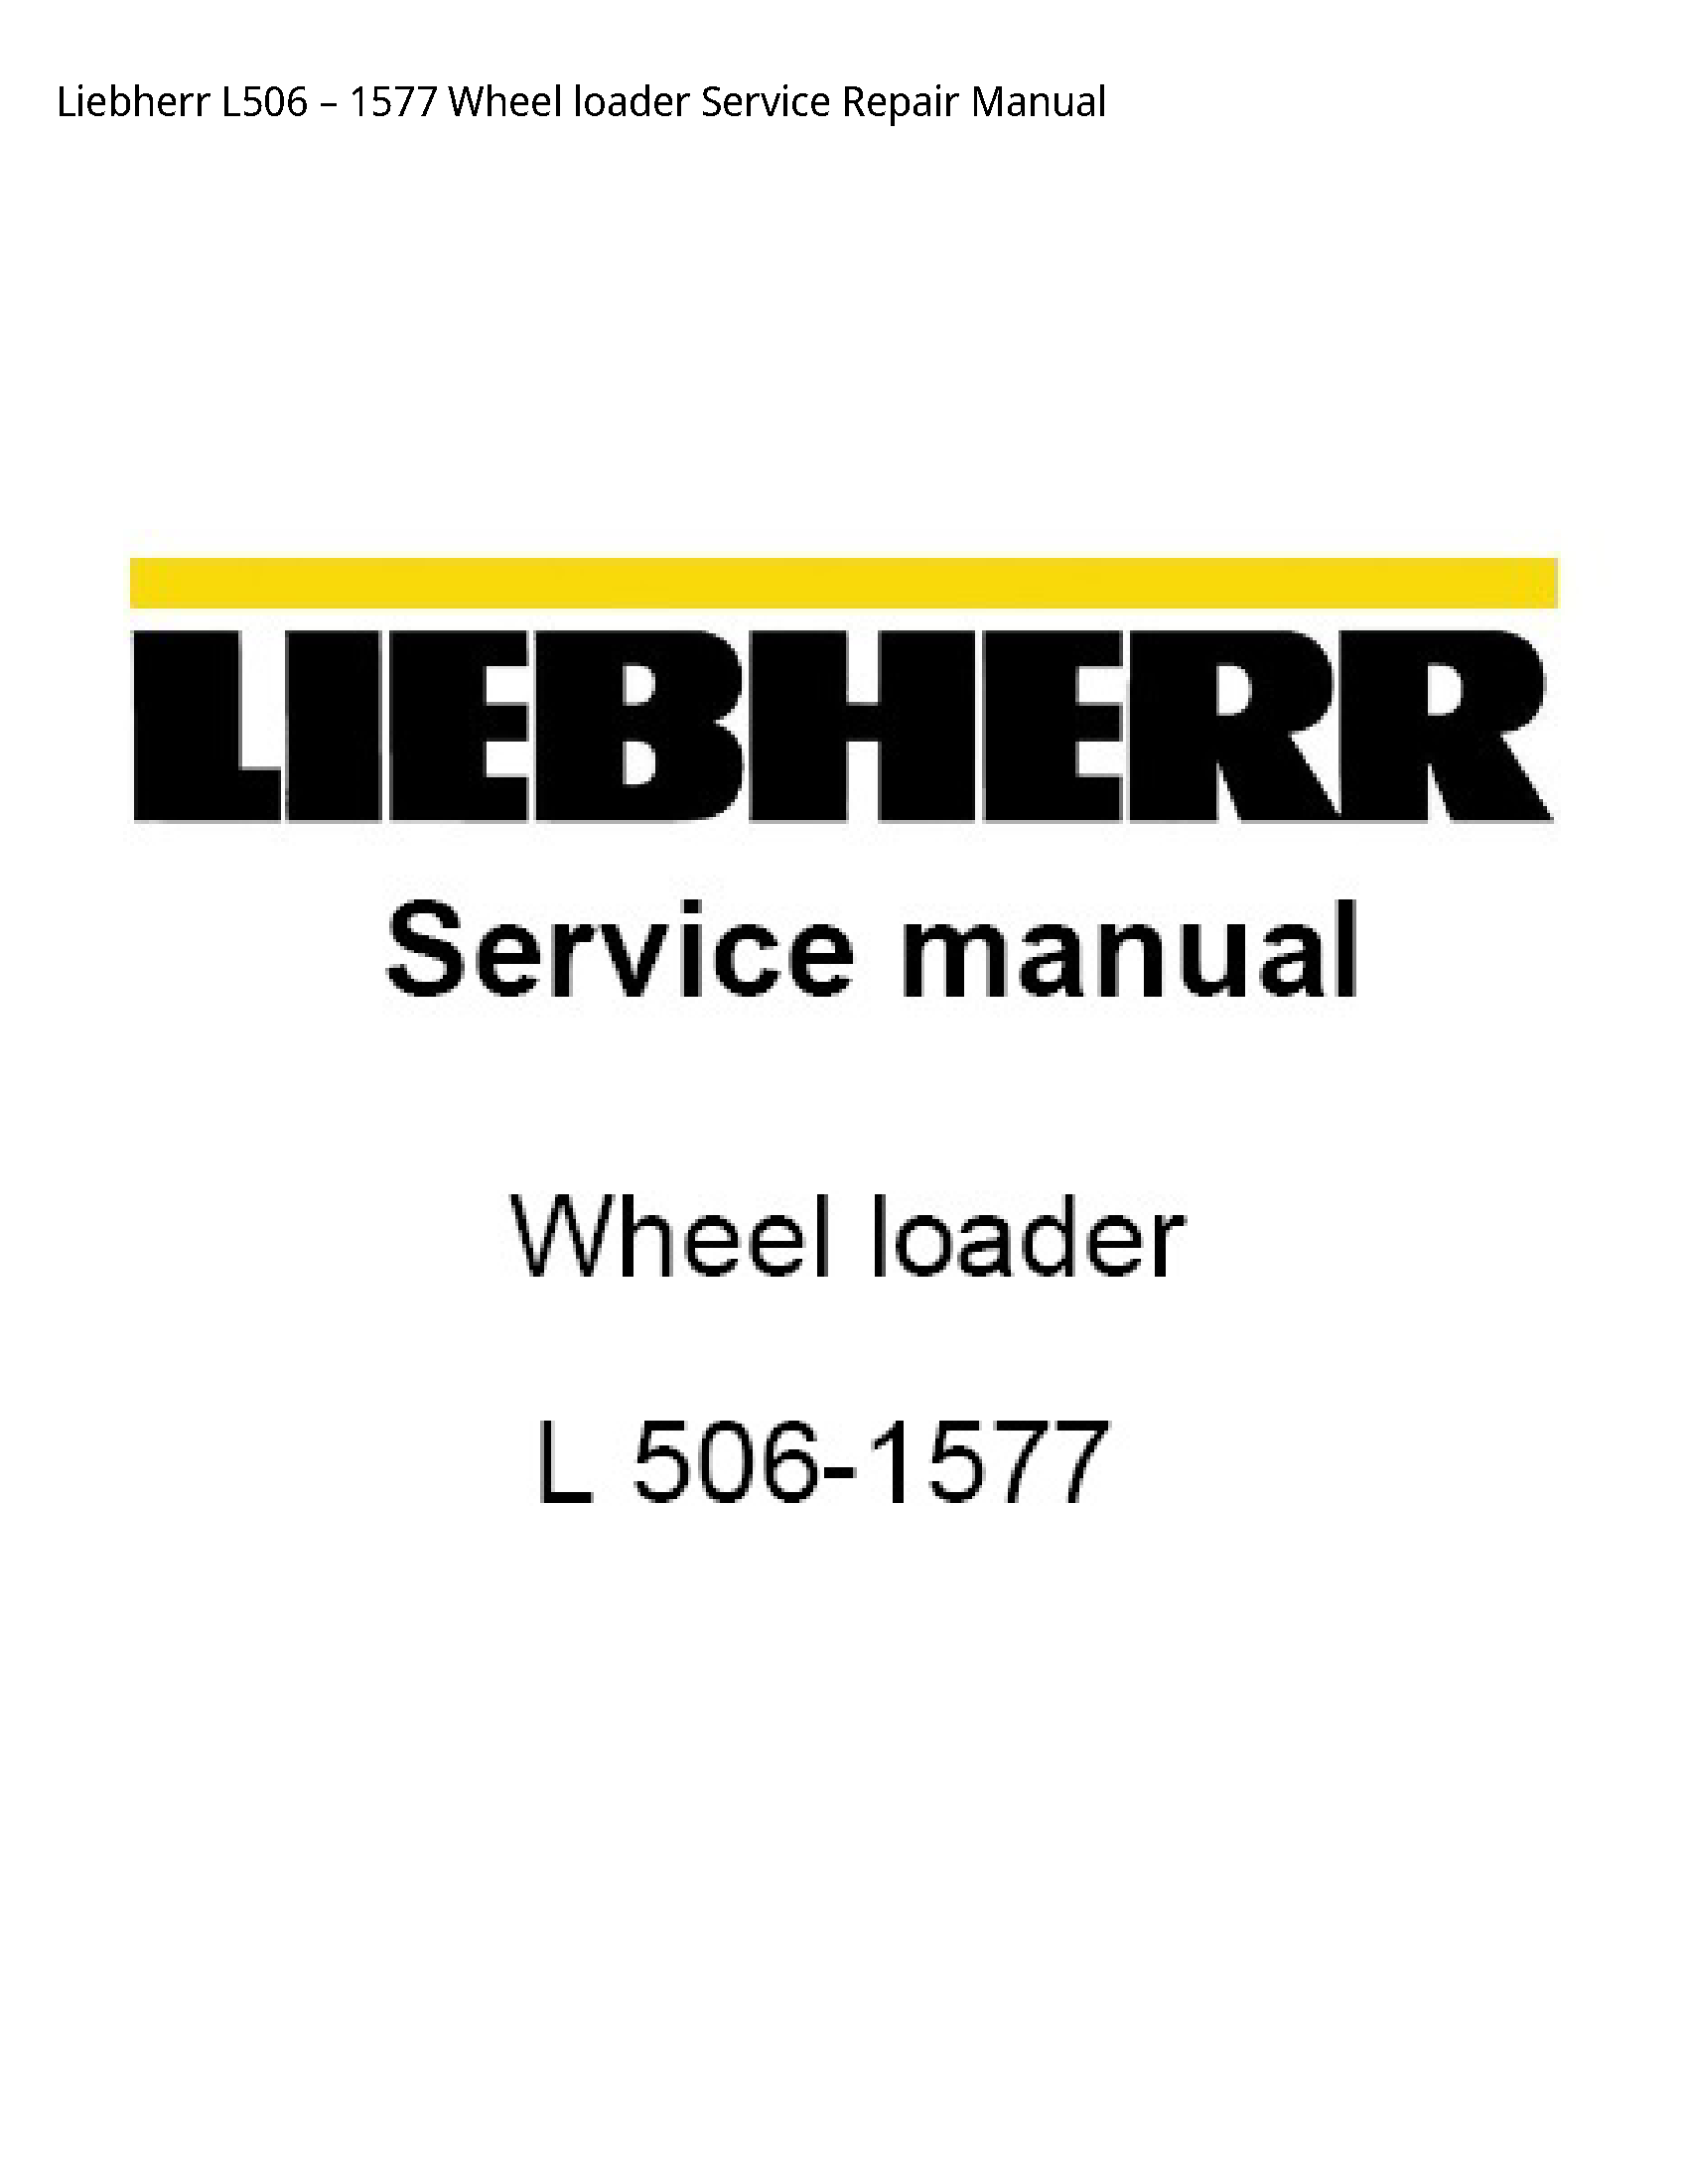 Liebherr L506 Wheel loader manual